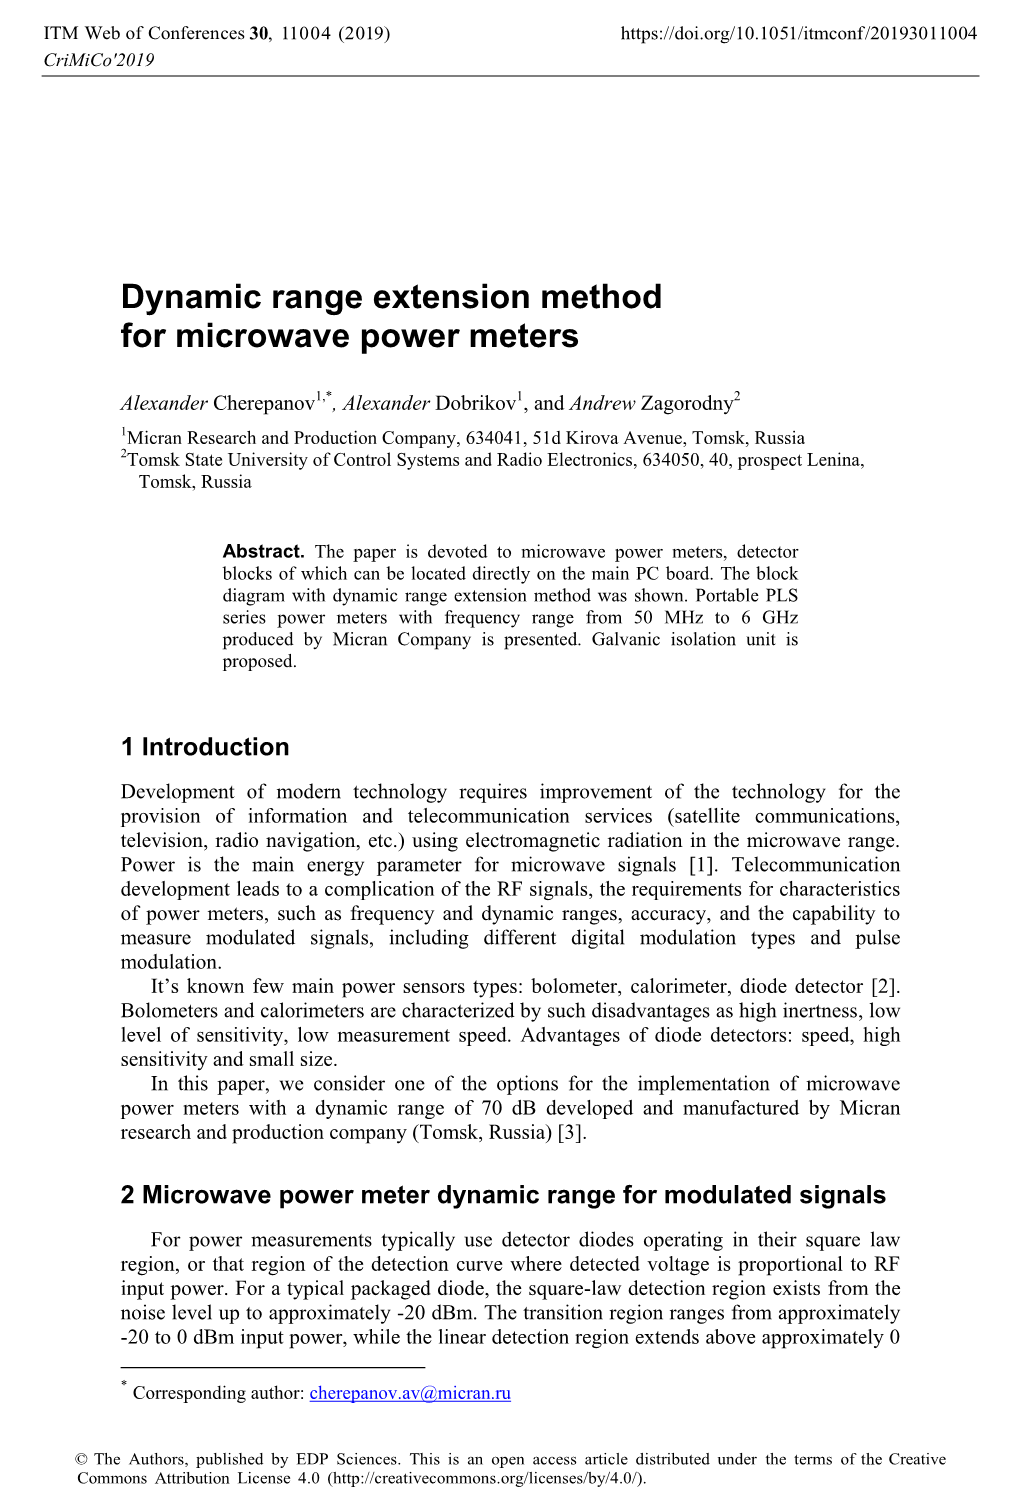 Dynamic Range Extension Method for Microwave Power Meters